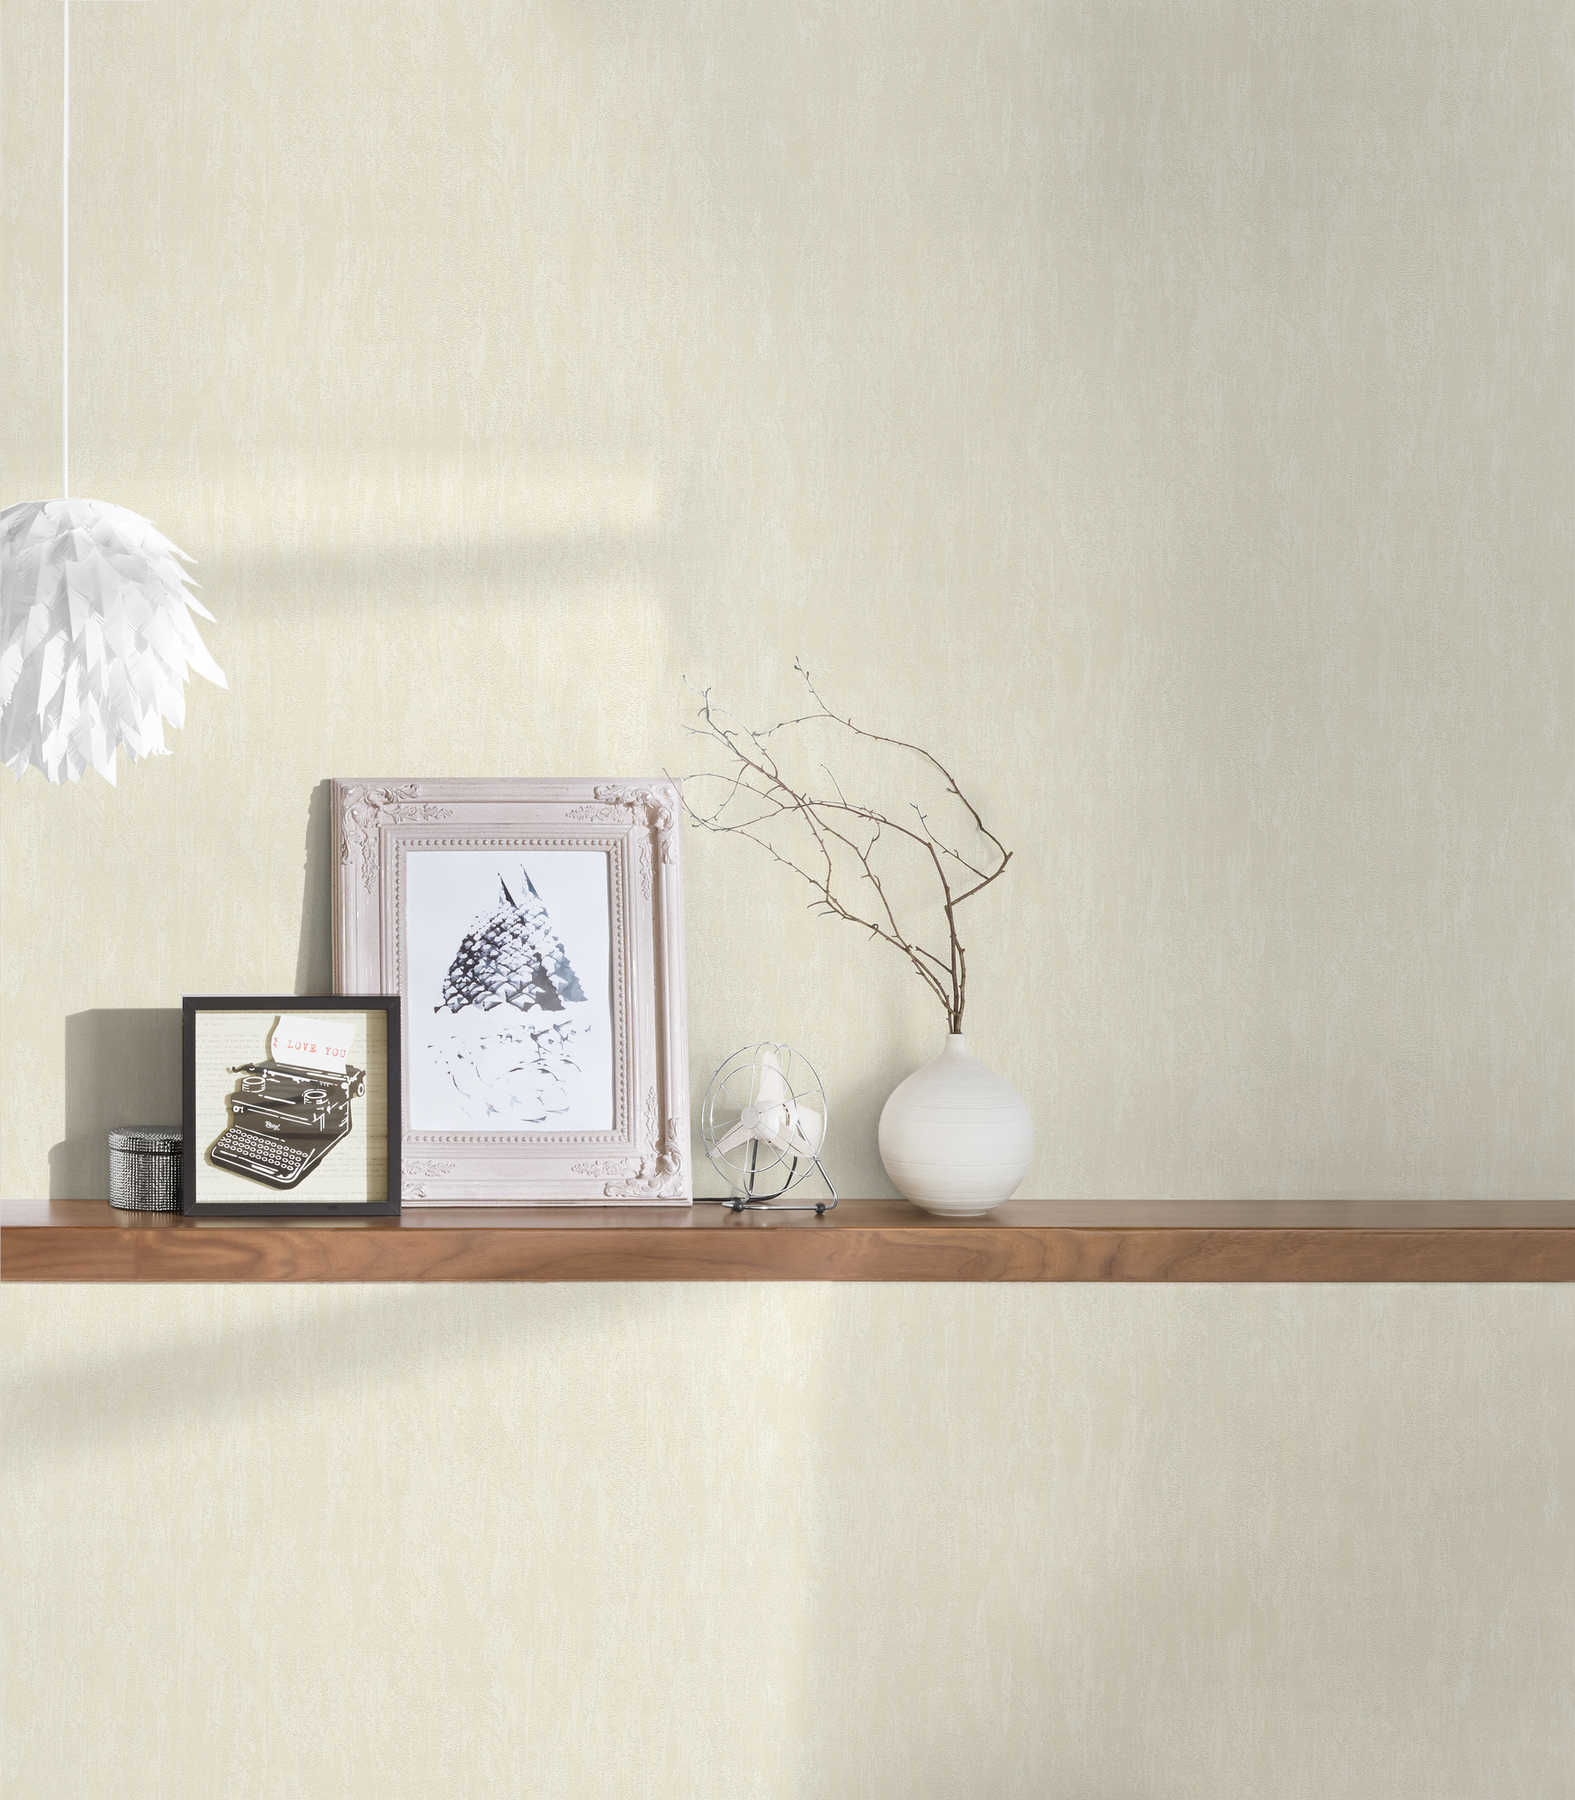             Neutral plain wallpaper in plaster look - cream
        